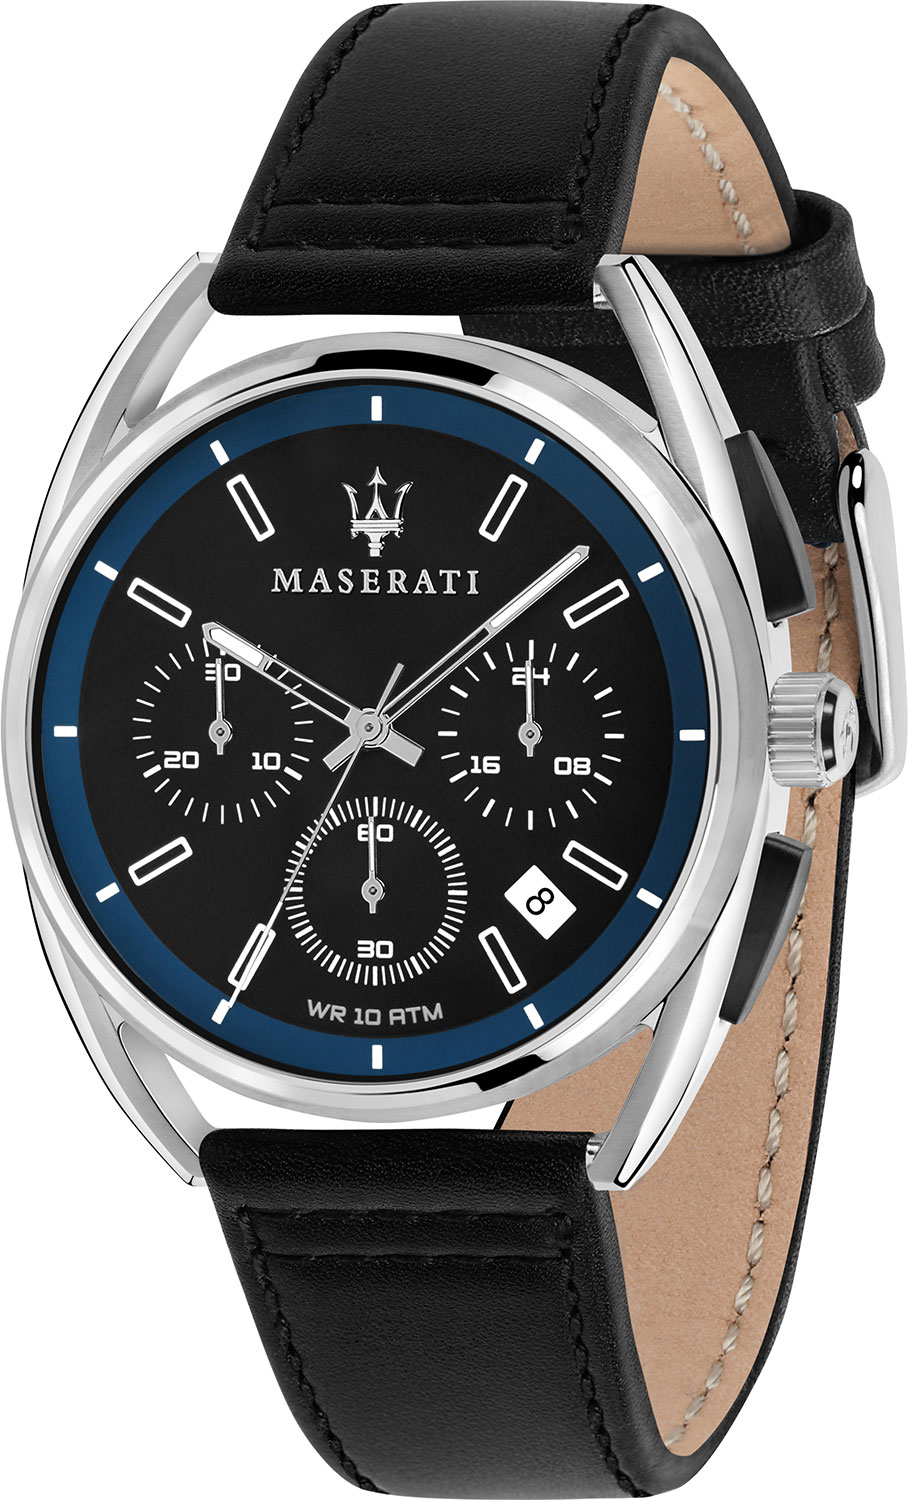   Maserati R8871632001  